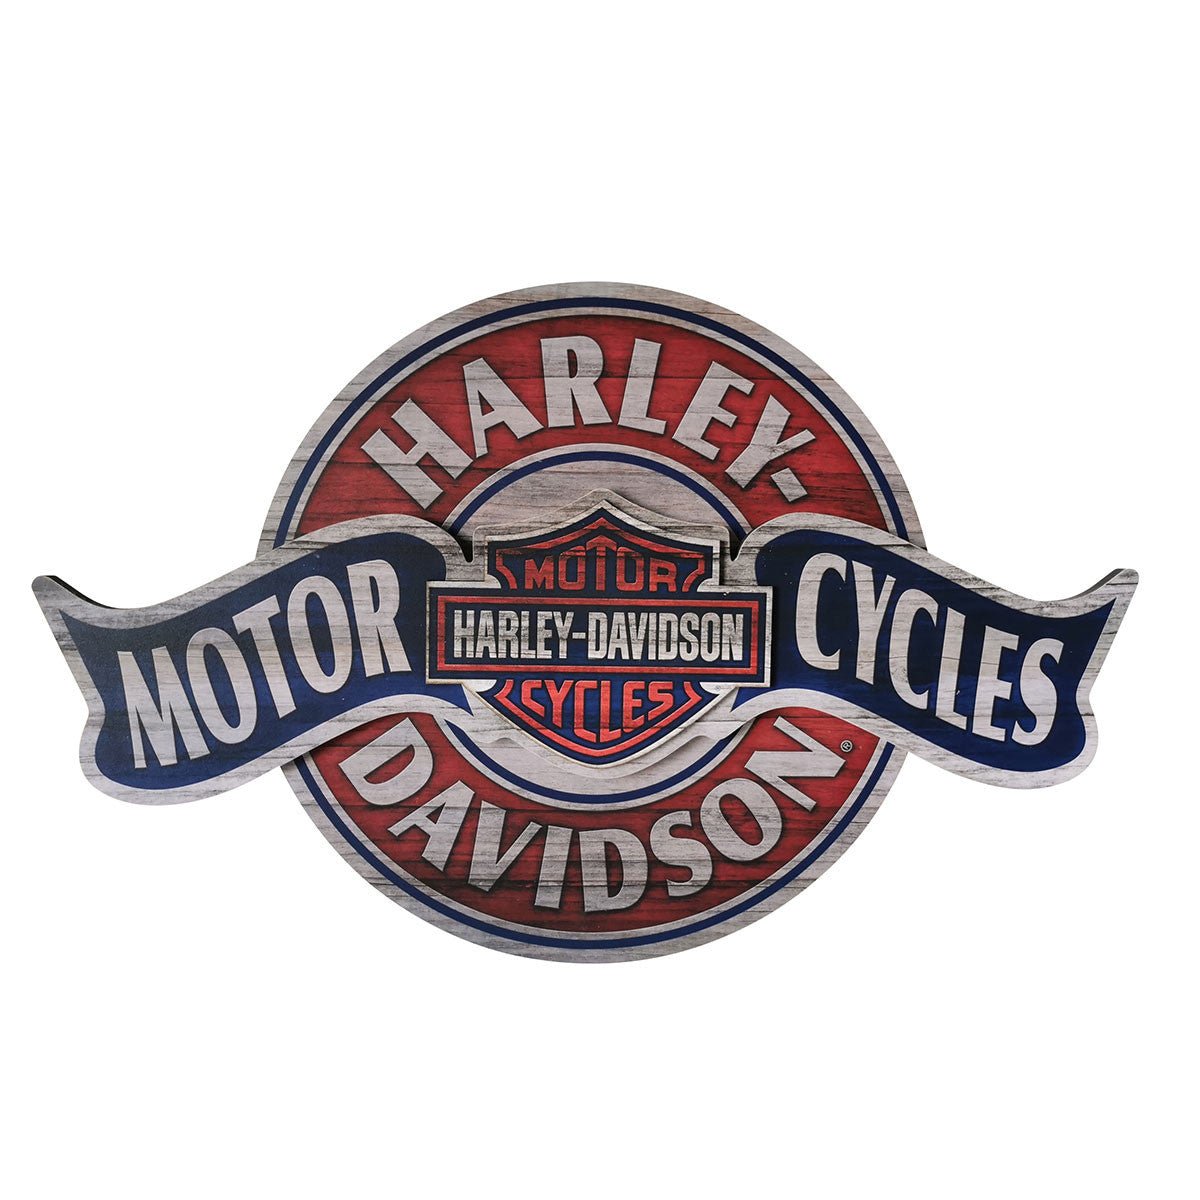 Harley-Davidson® Motorcycles Banner Pub Sign